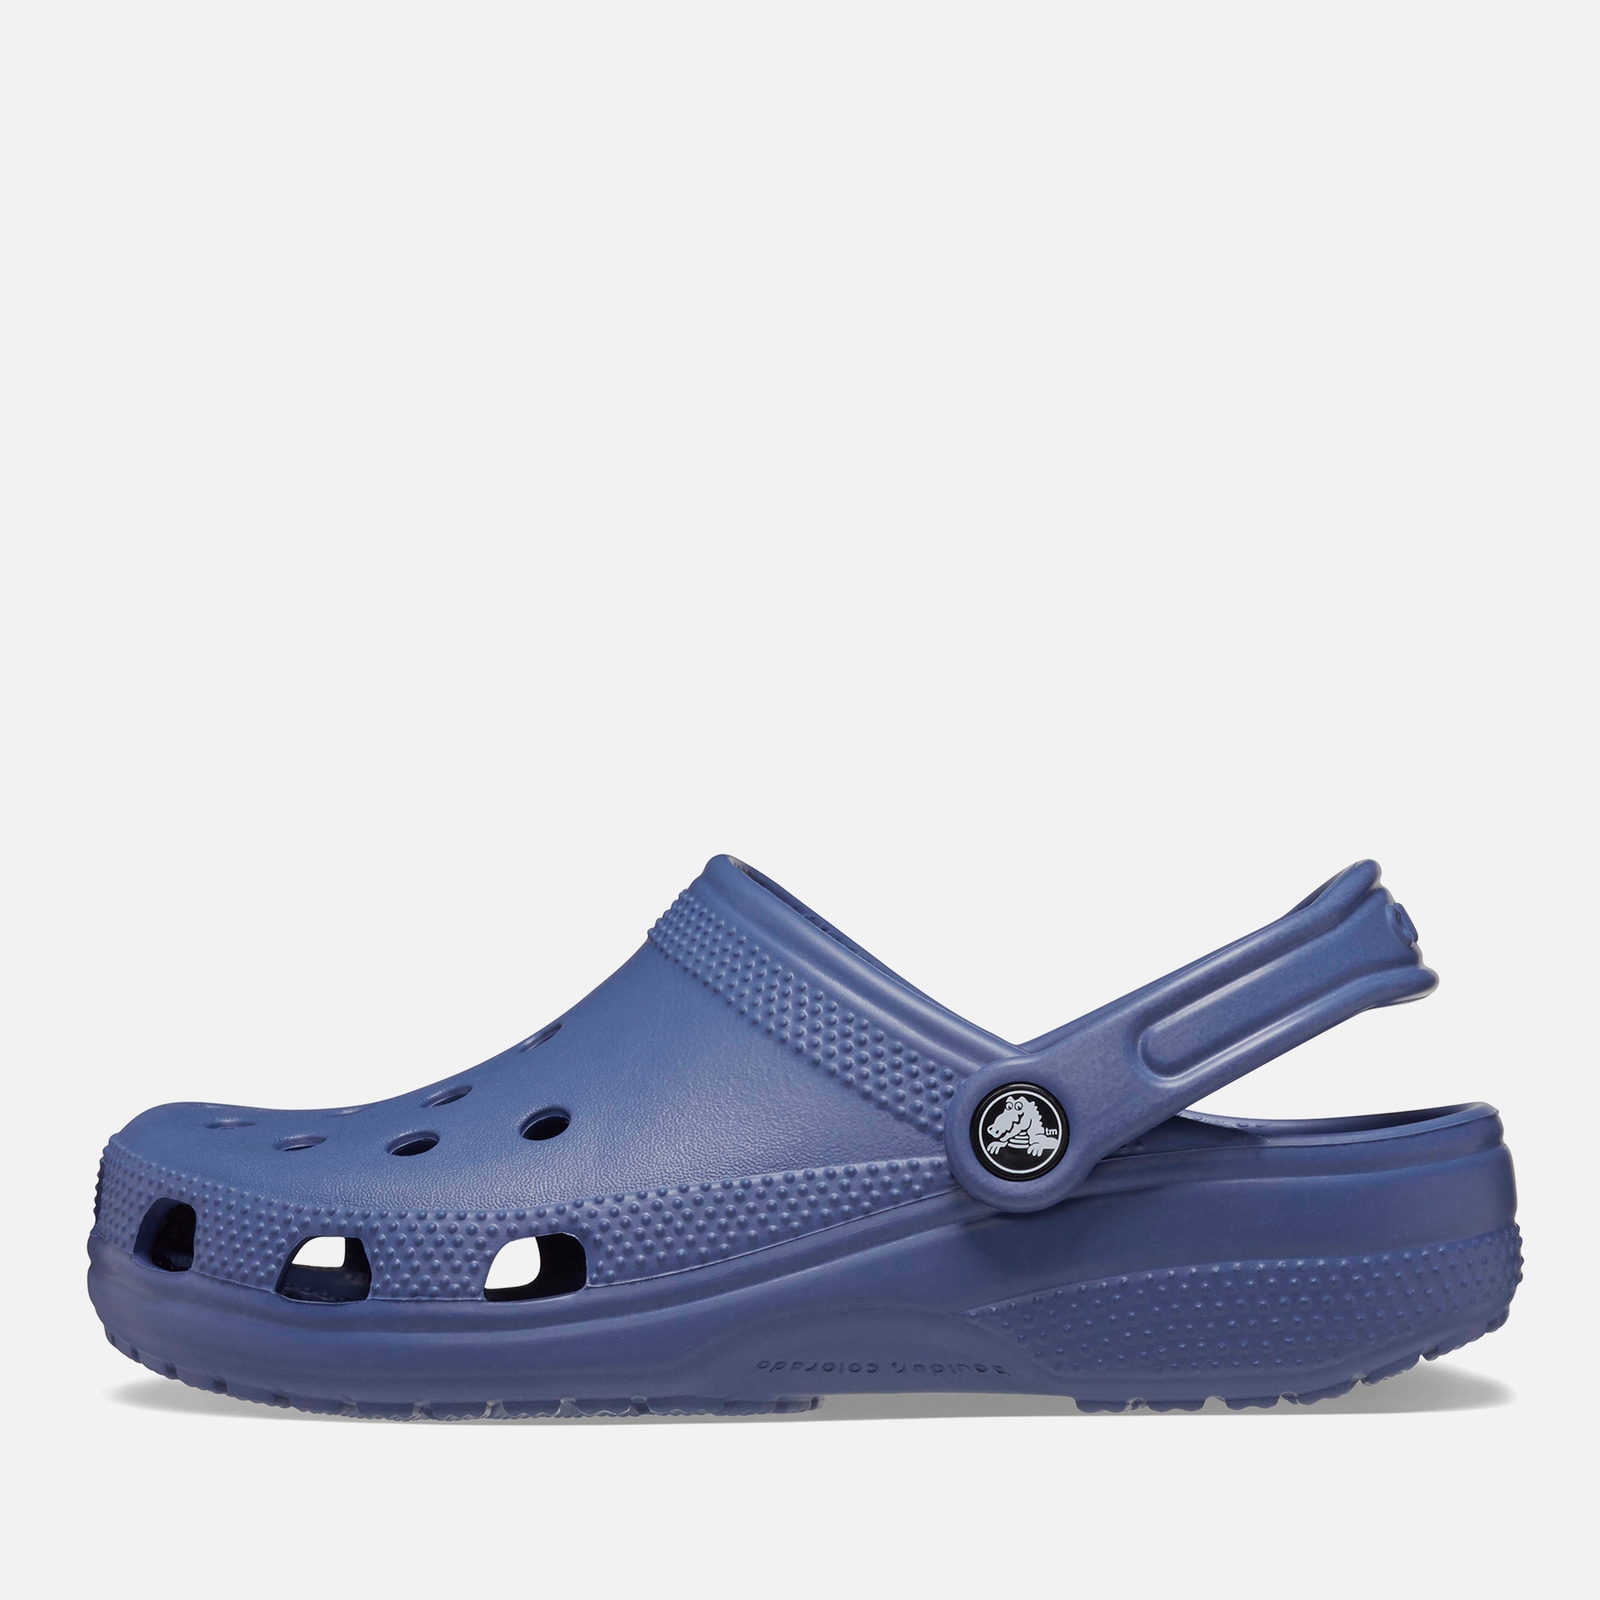 crocs men's classic clogs - bijou blue - m7